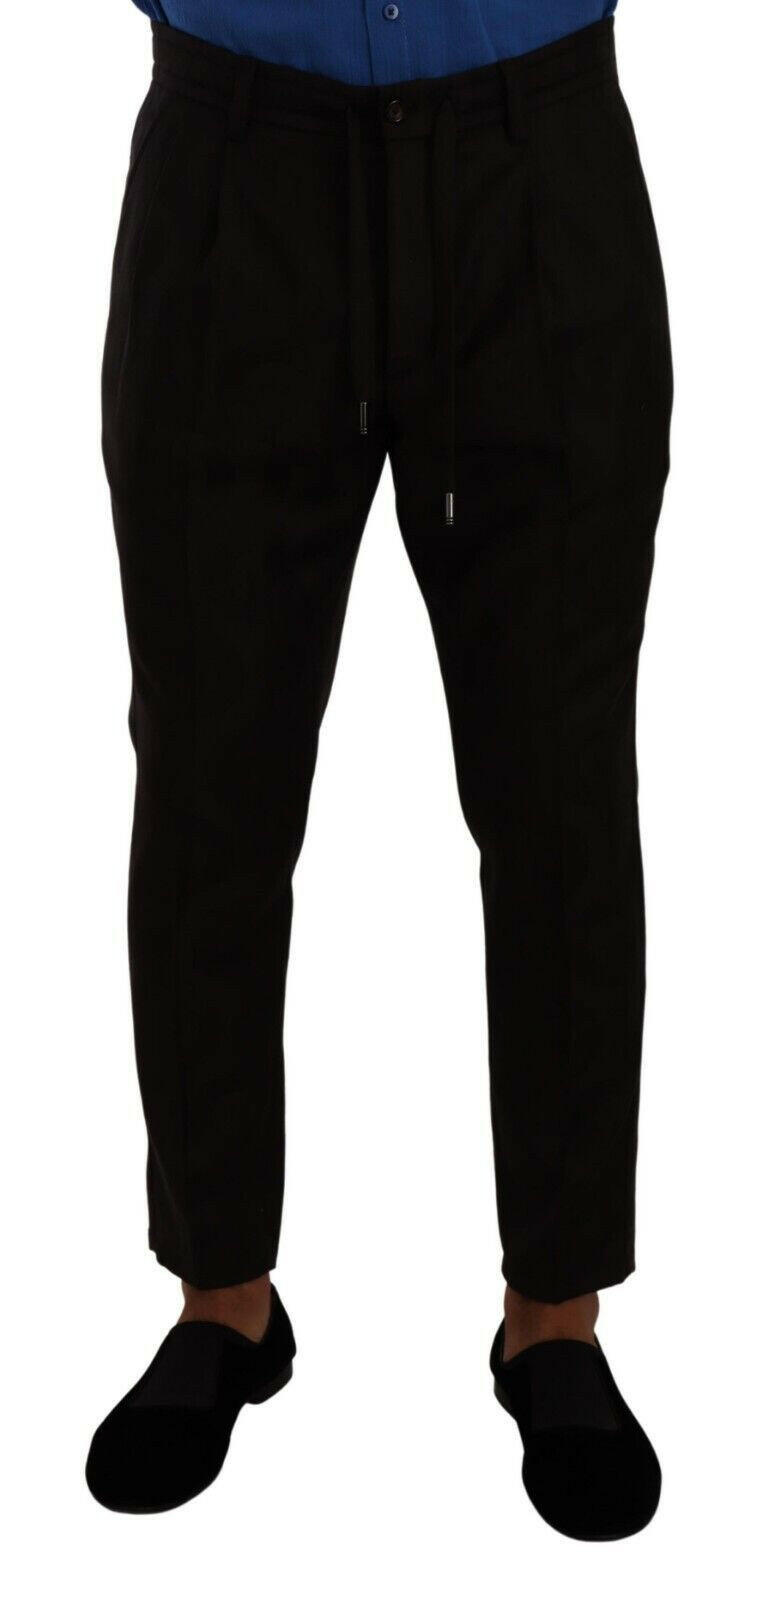 Dolce & Gabbana Bordeaux Wool Men Skinny Trouser Pants - GENUINE AUTHENTIC BRAND LLC  